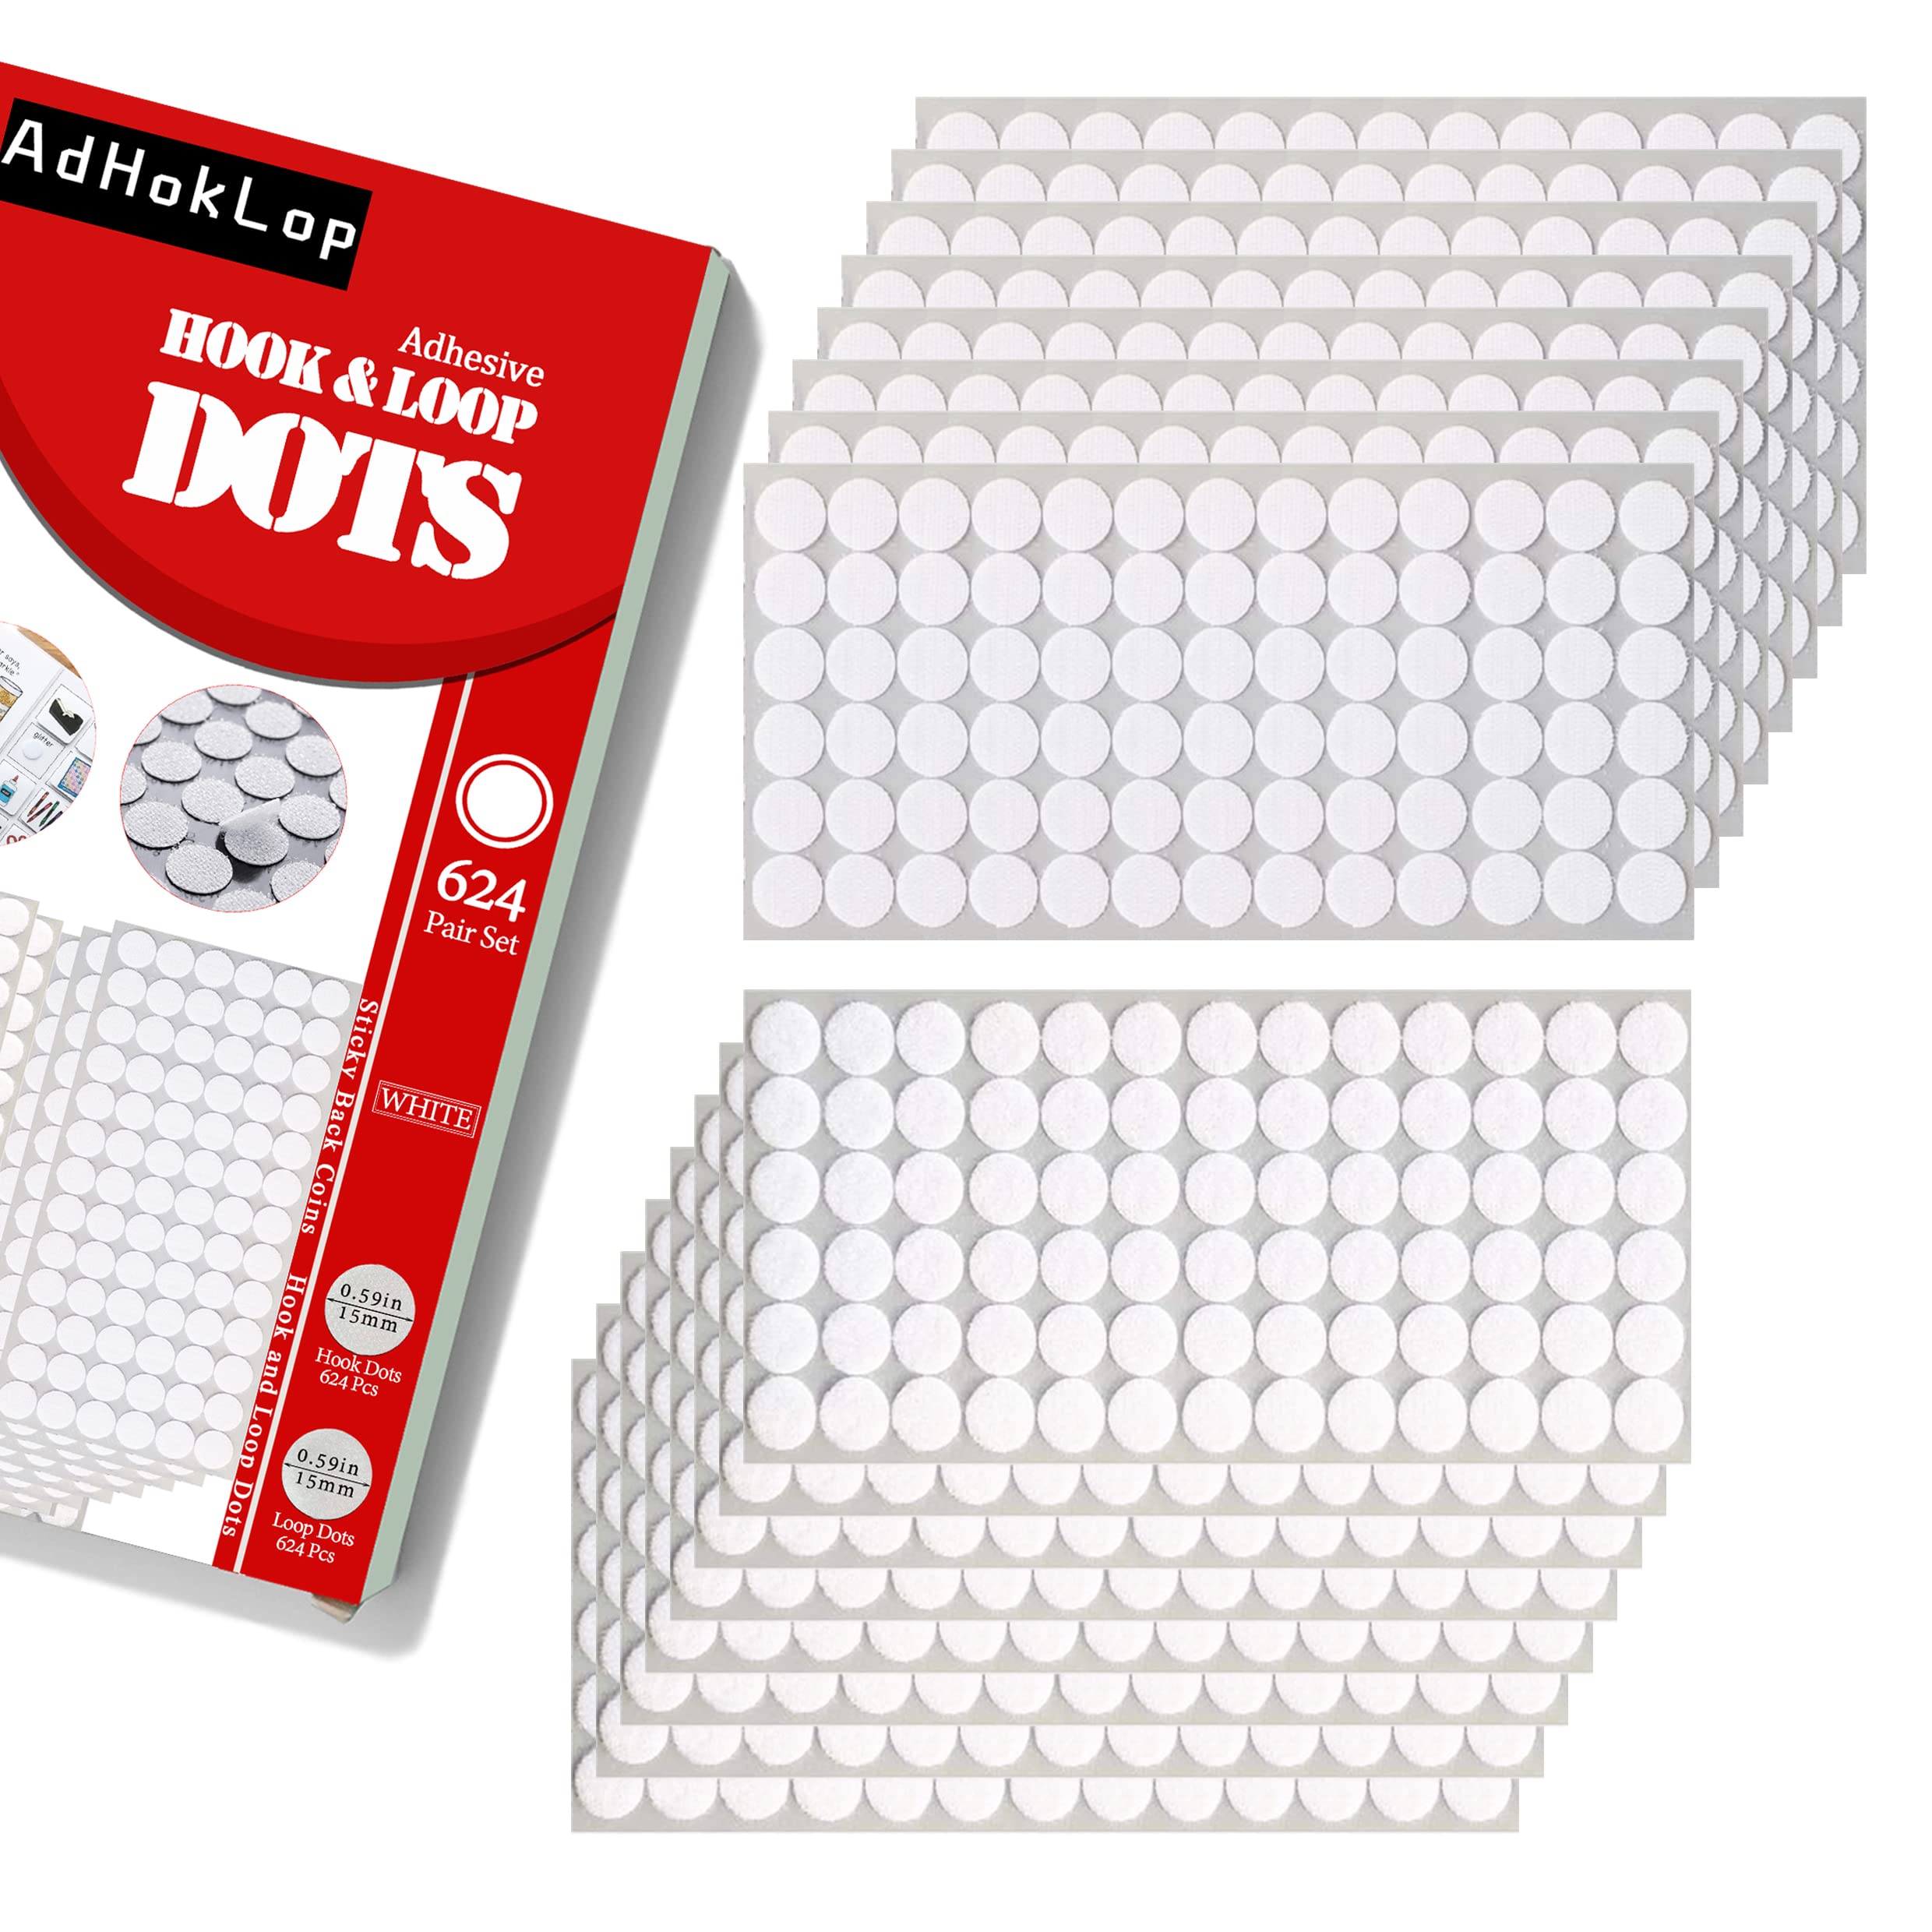 Adhoklop 1248 Pcs (624 Pairs) Dots with Adhesive 0.59 Inch